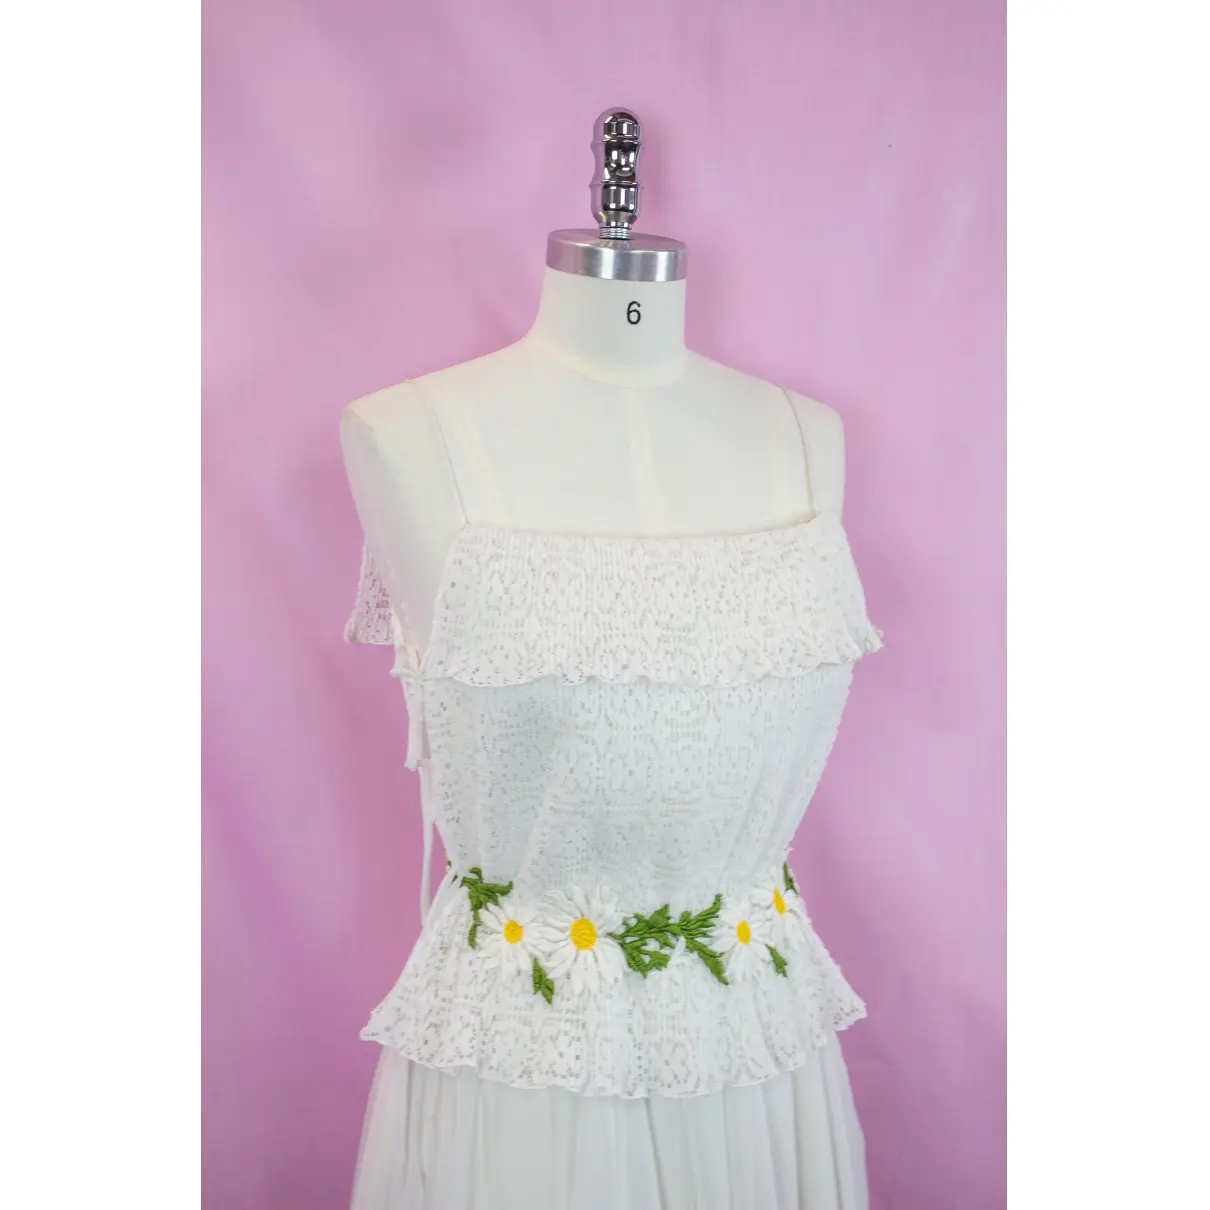 Jean Varon Mid-length dress for sale - Vintage